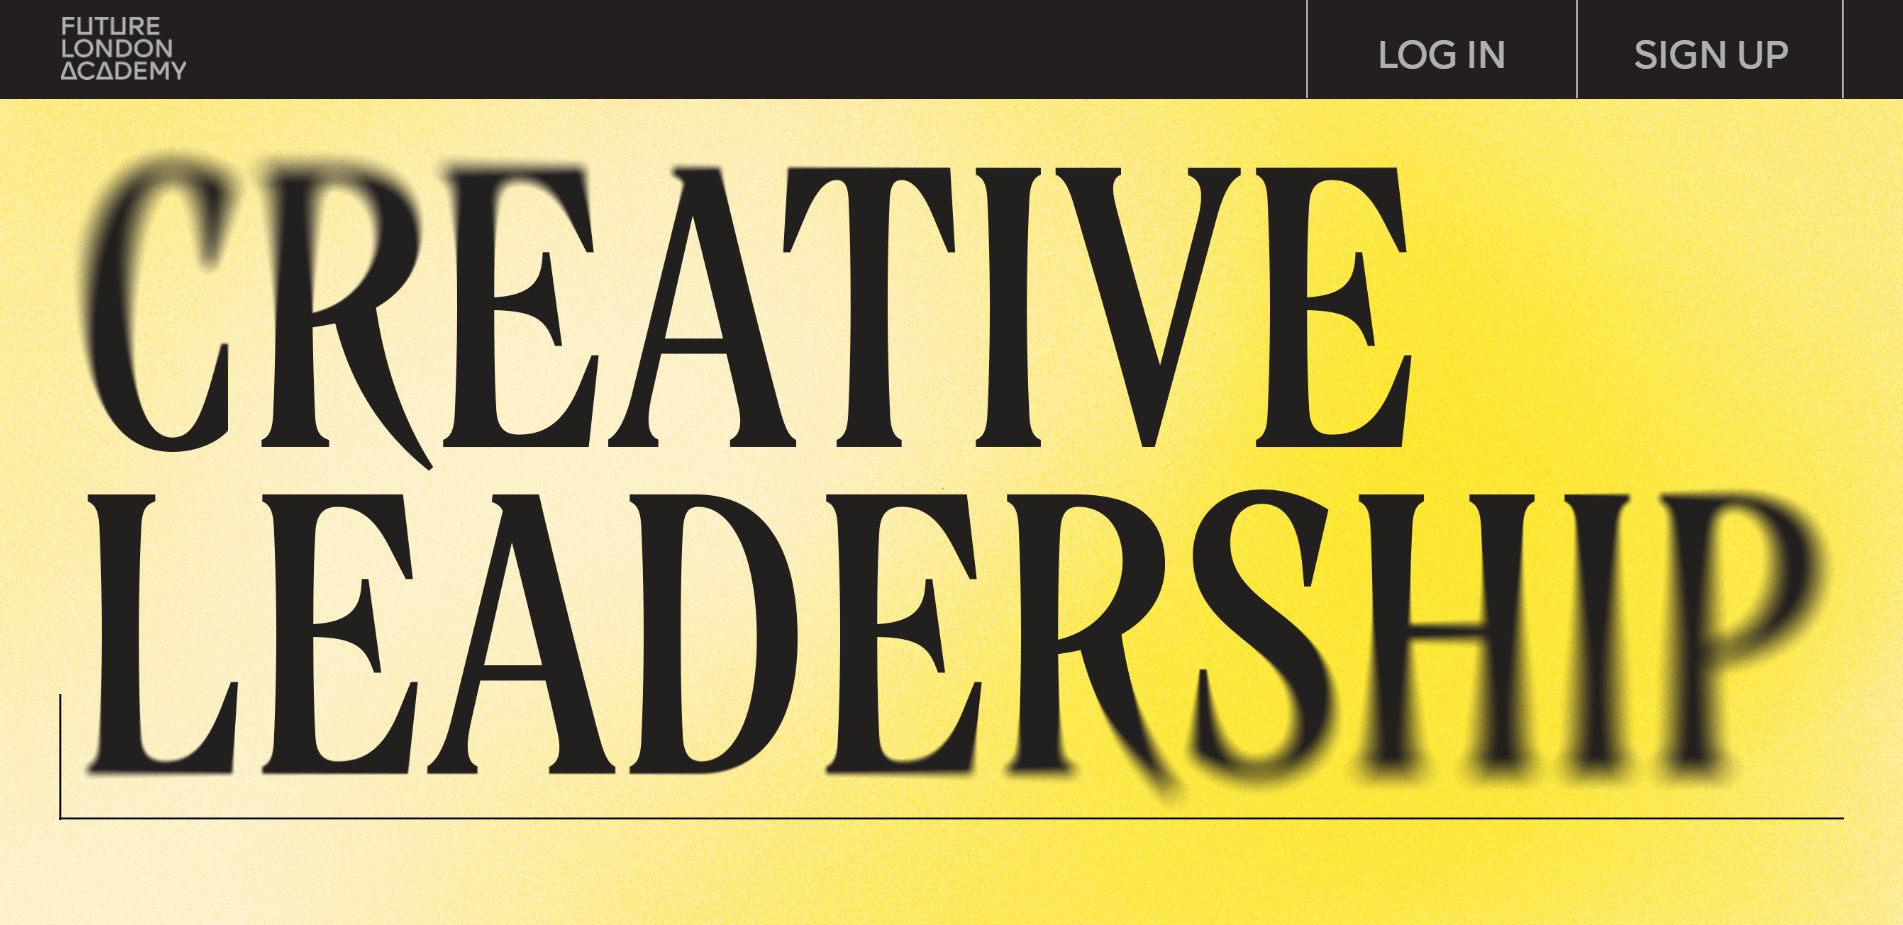 Creative leadership design agencies about page